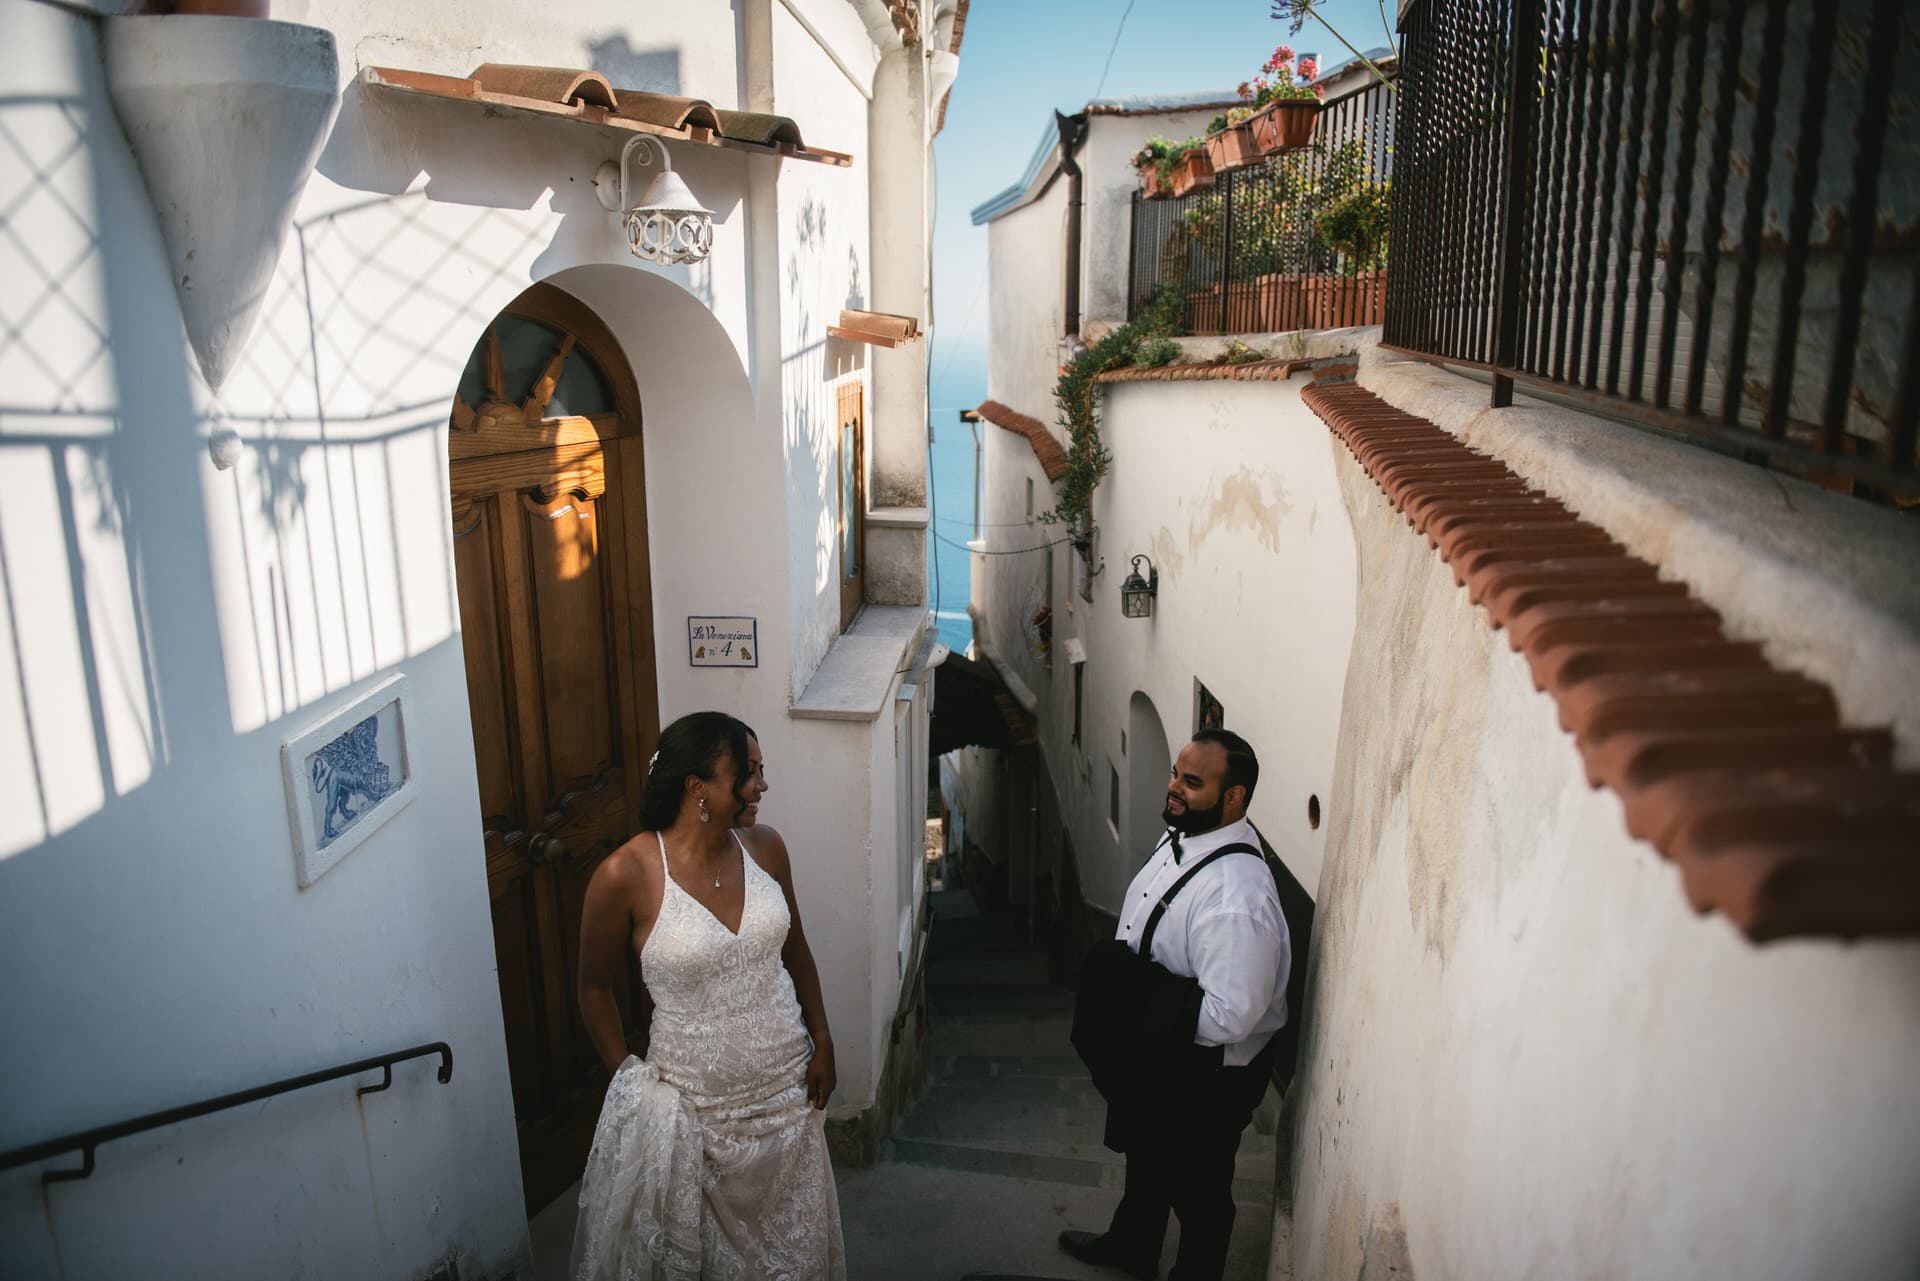 Couple photoshoot on the Path of Gods - Sentieri degli dei during their elopement on the amalfi Coast